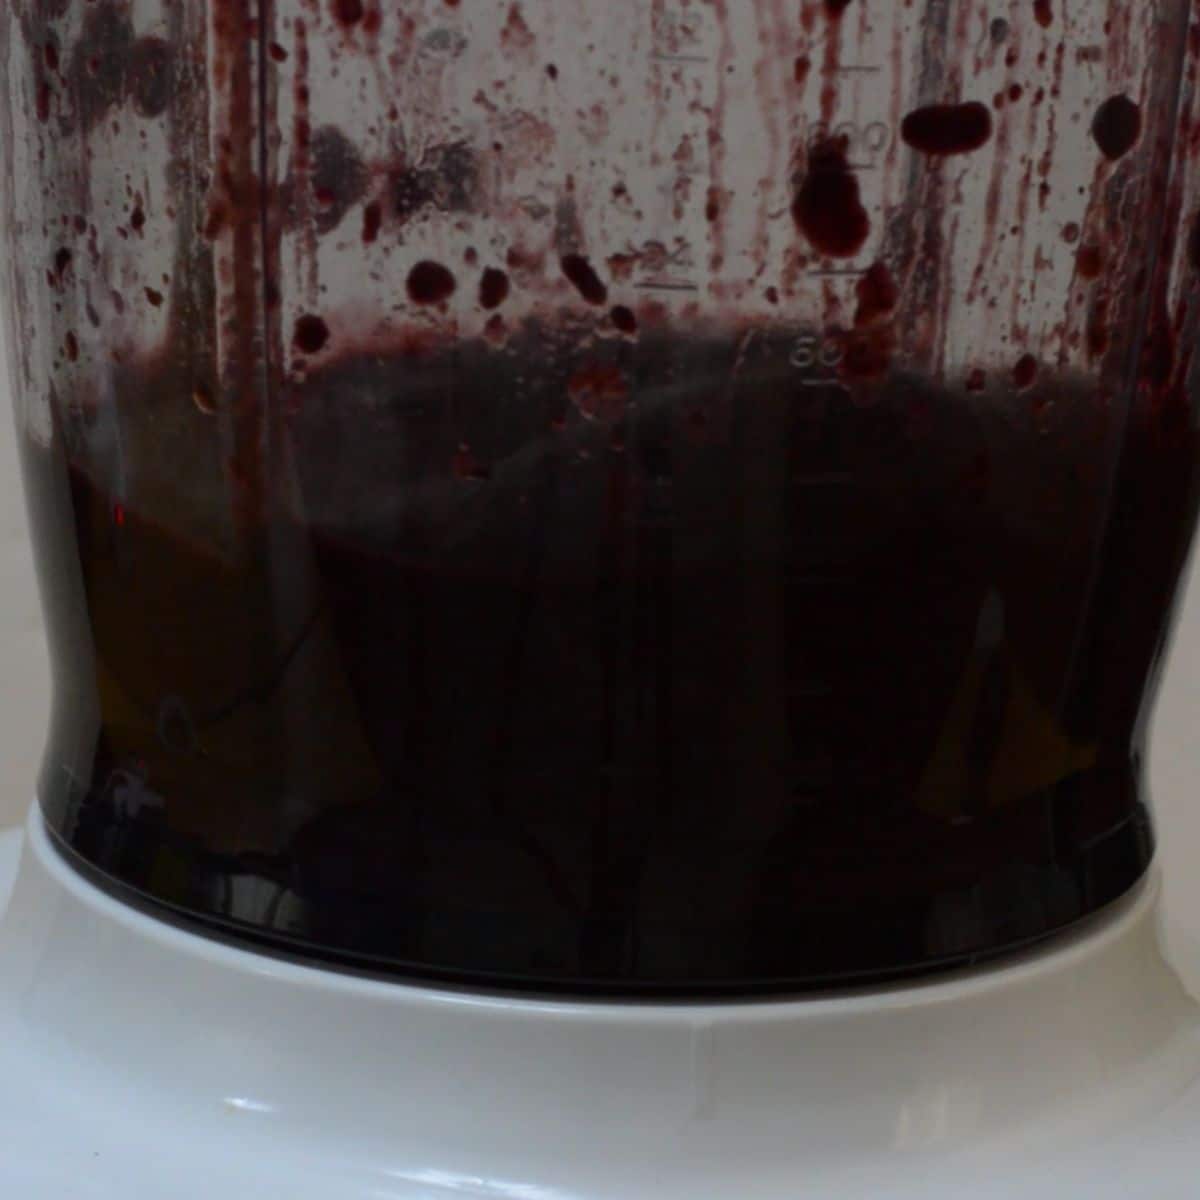 blending blueberry coulis in the blender jar.